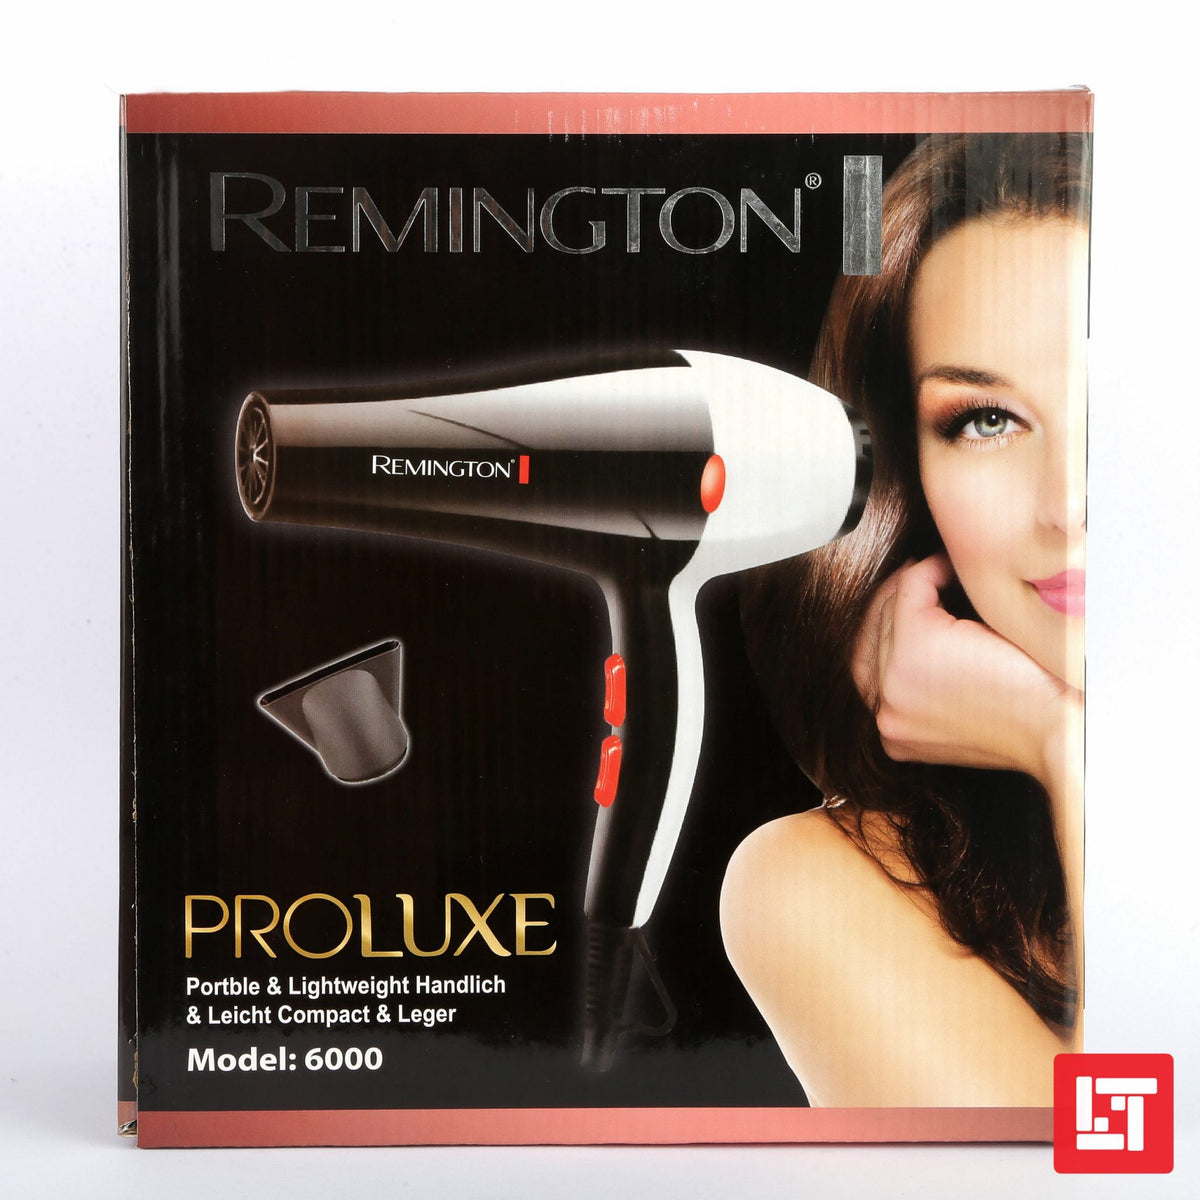 Remington Proluxe Hair Dryer Portable Style Inspiration 6000 freeshipping - lasertag.pk